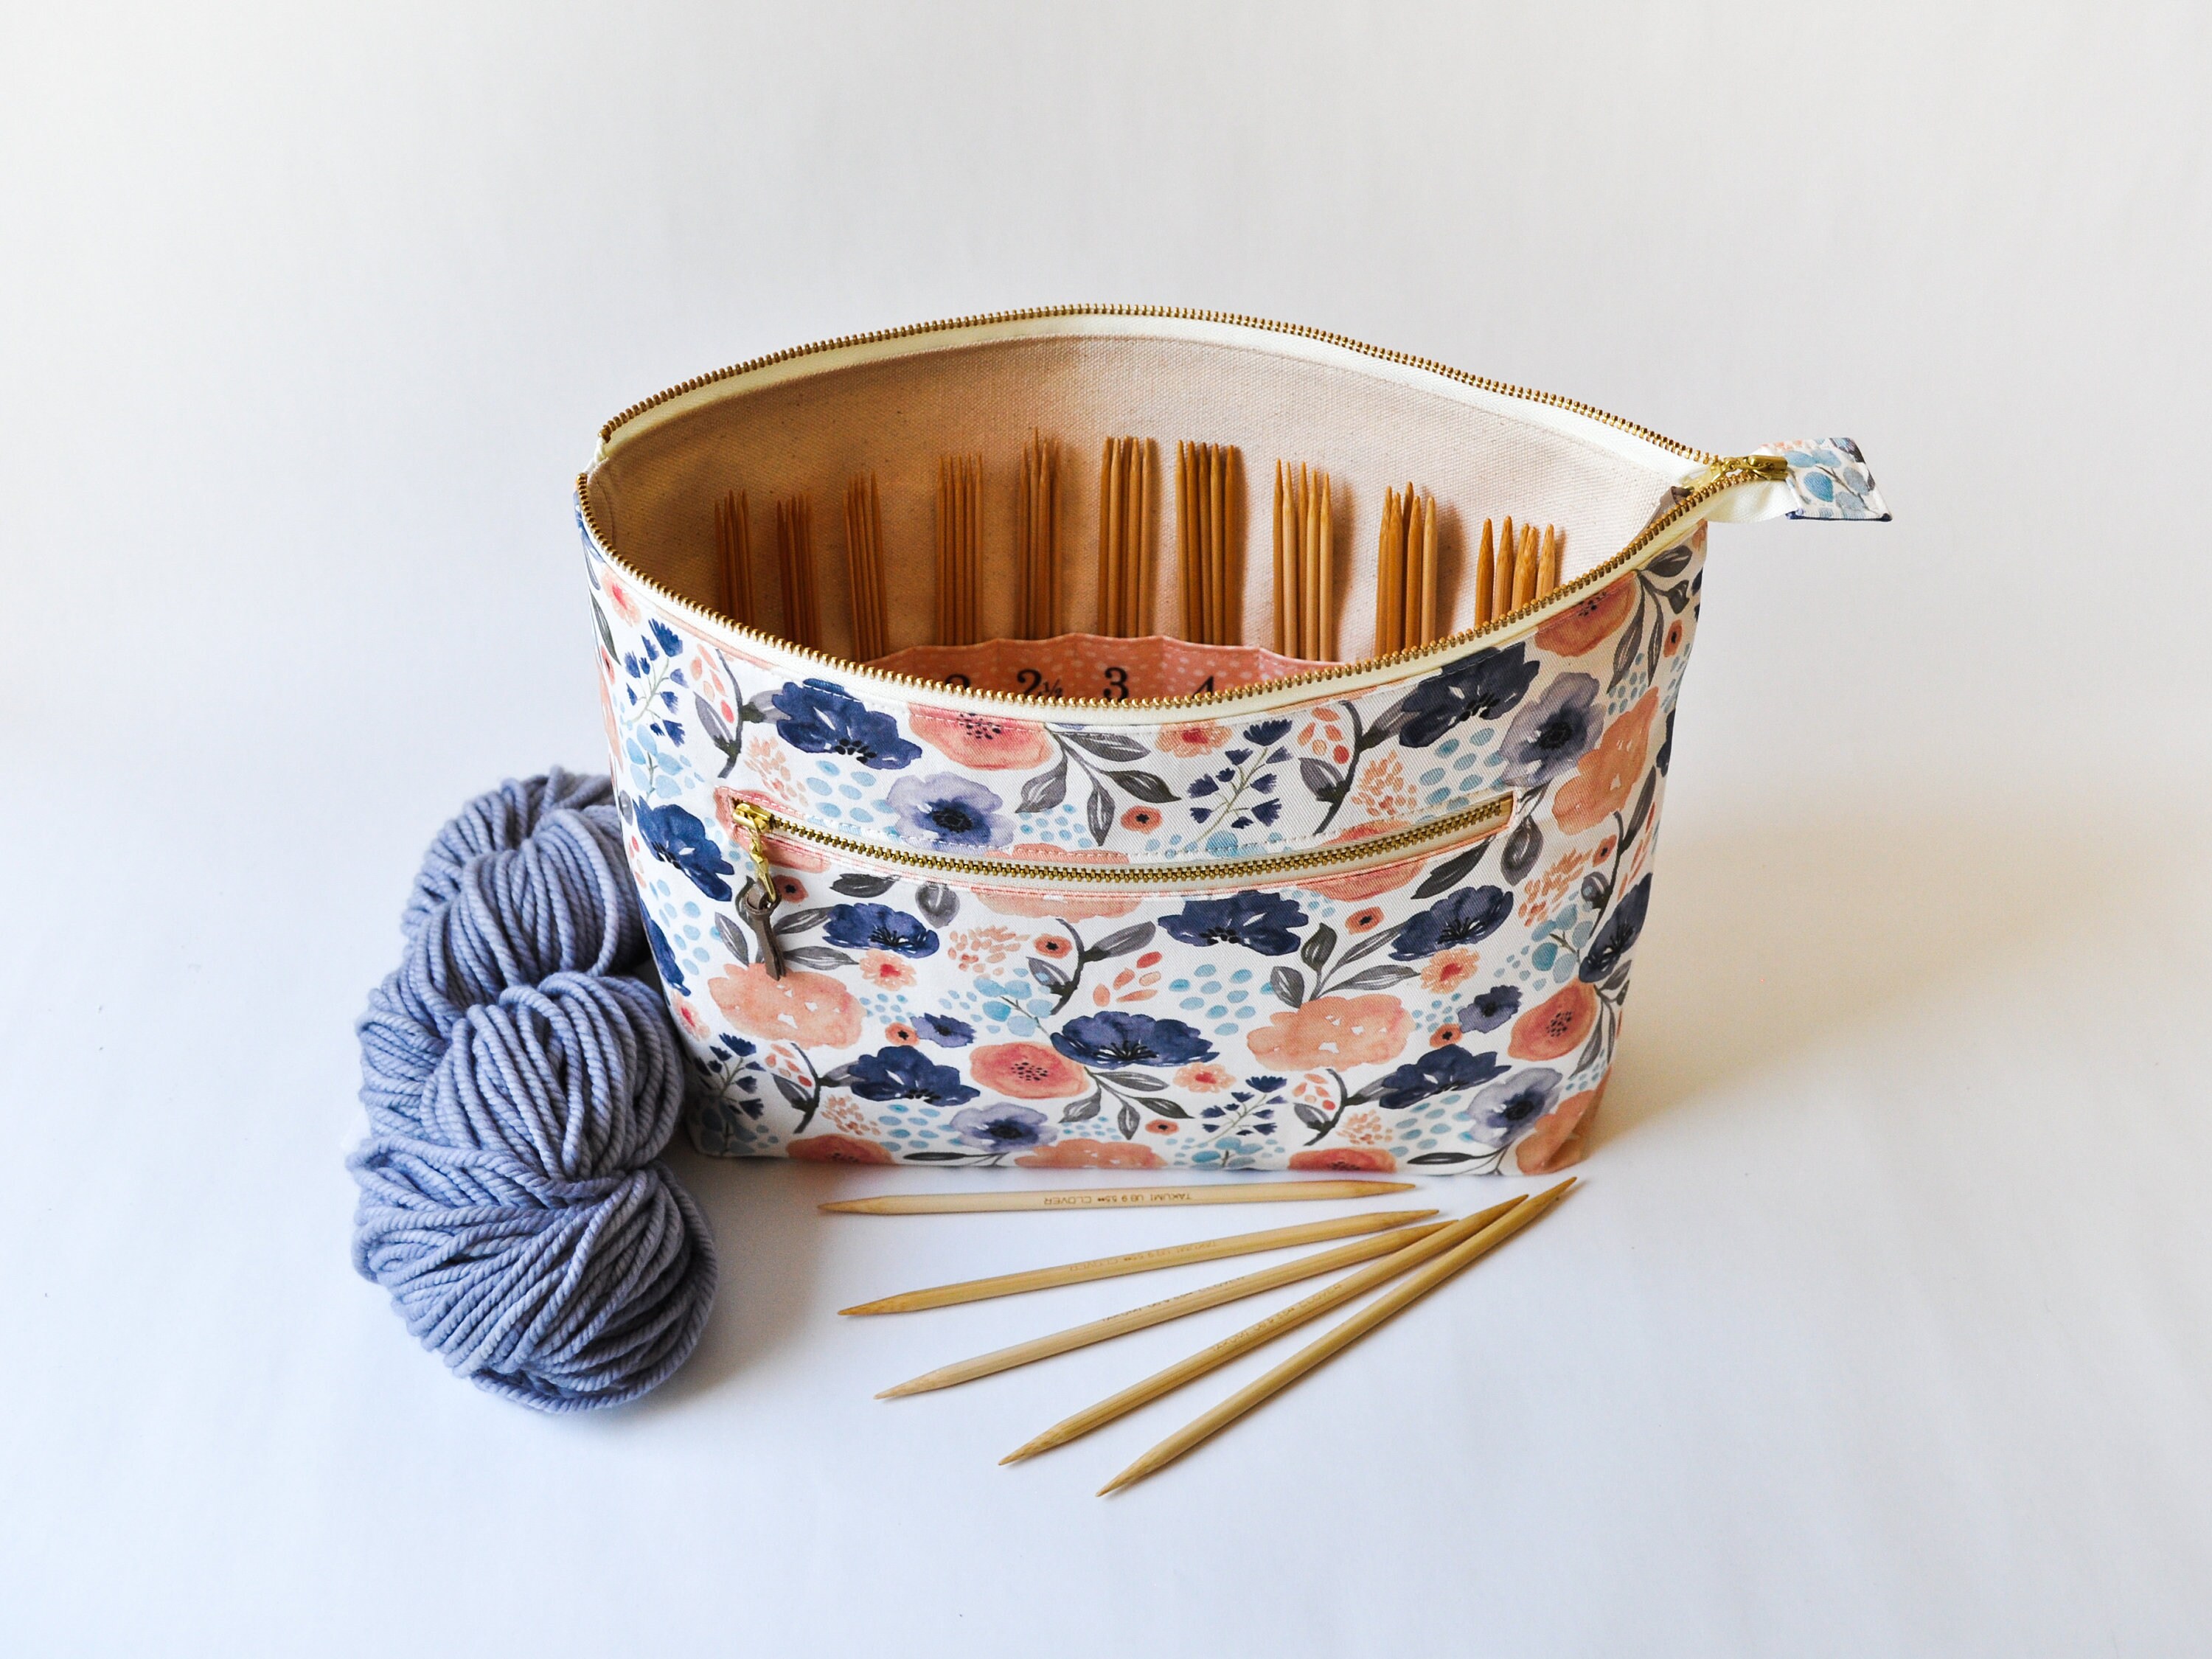 Crochet Tote Bag, Knitting Tote Bag, Personalised Bag, Knitting Project  Bag, Yarn Bag, Knitting Storage, Grandma Knitting, Cute Mum Gift 